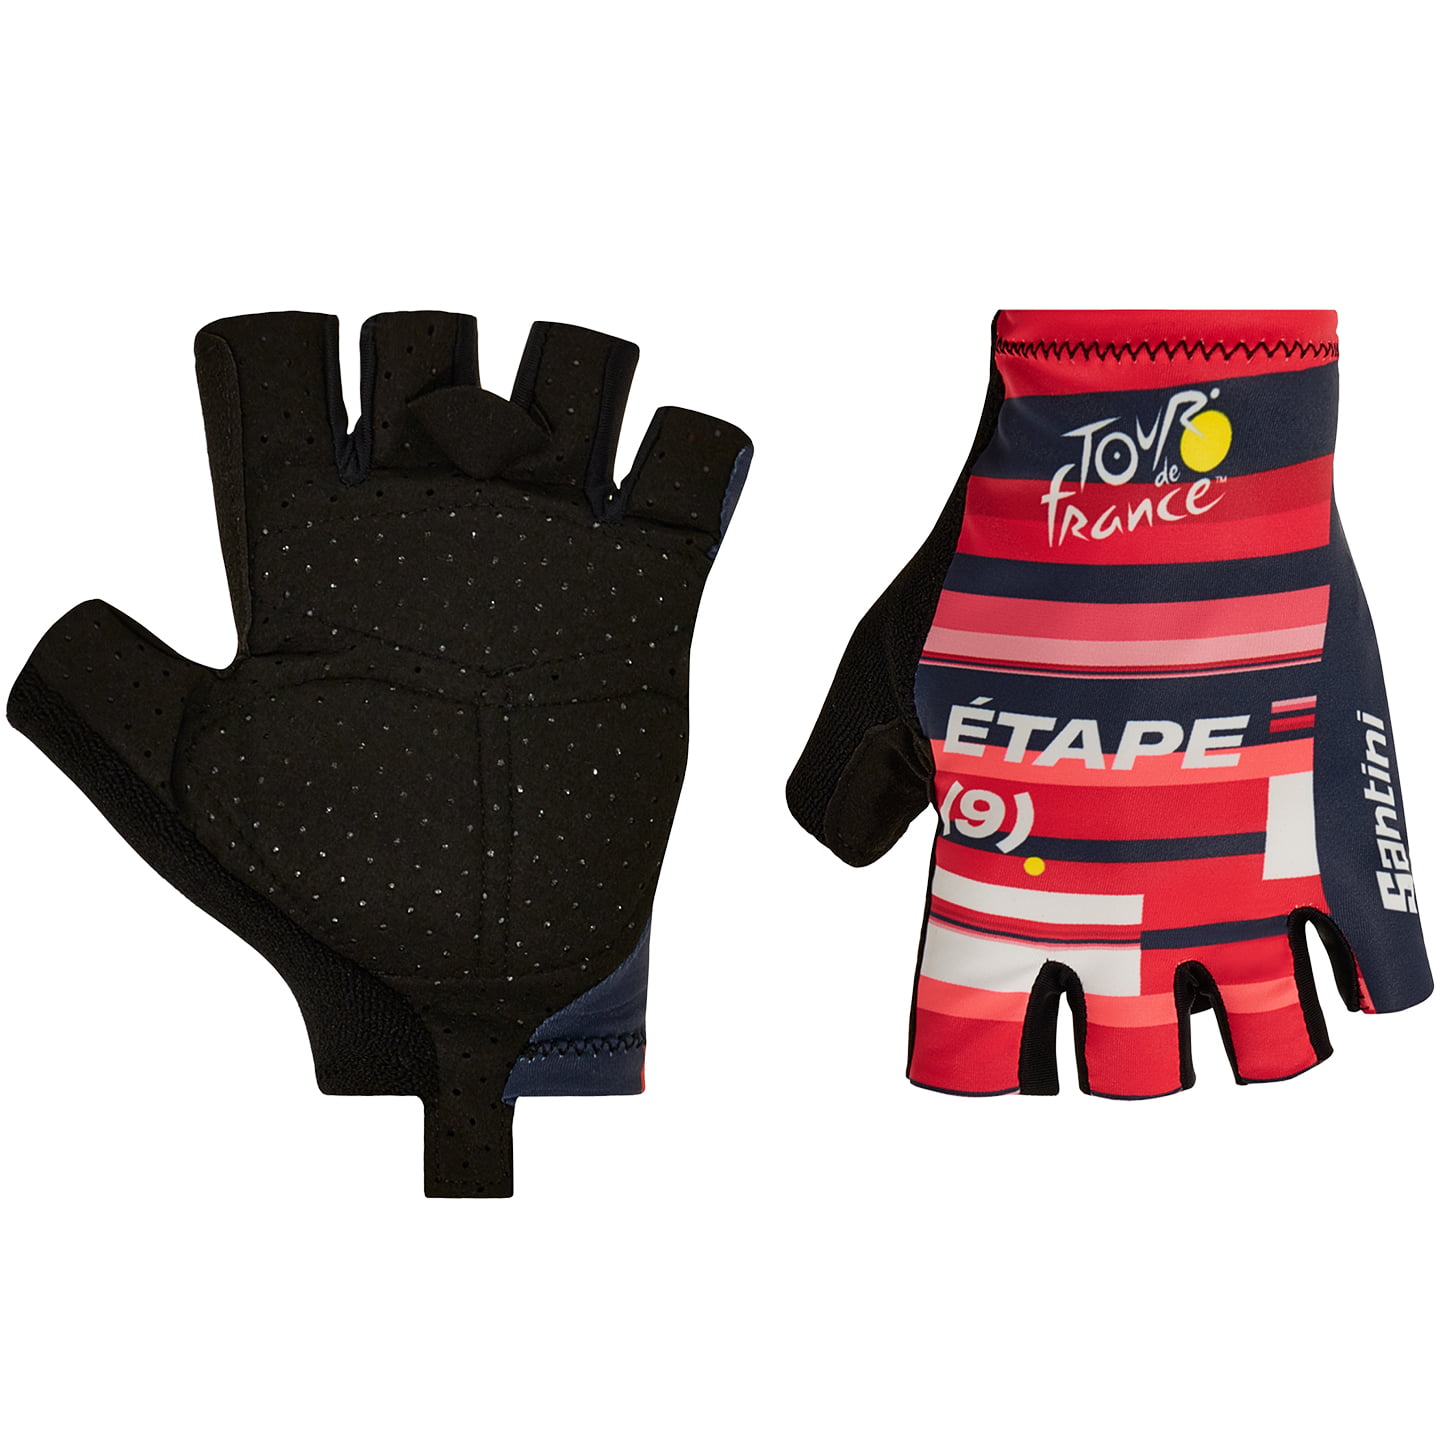 TOUR DE FRANCE Gloves Aigle-Chatel 2022 Cycling Gloves, for men, size XL, Cycling gloves, Cycle gear